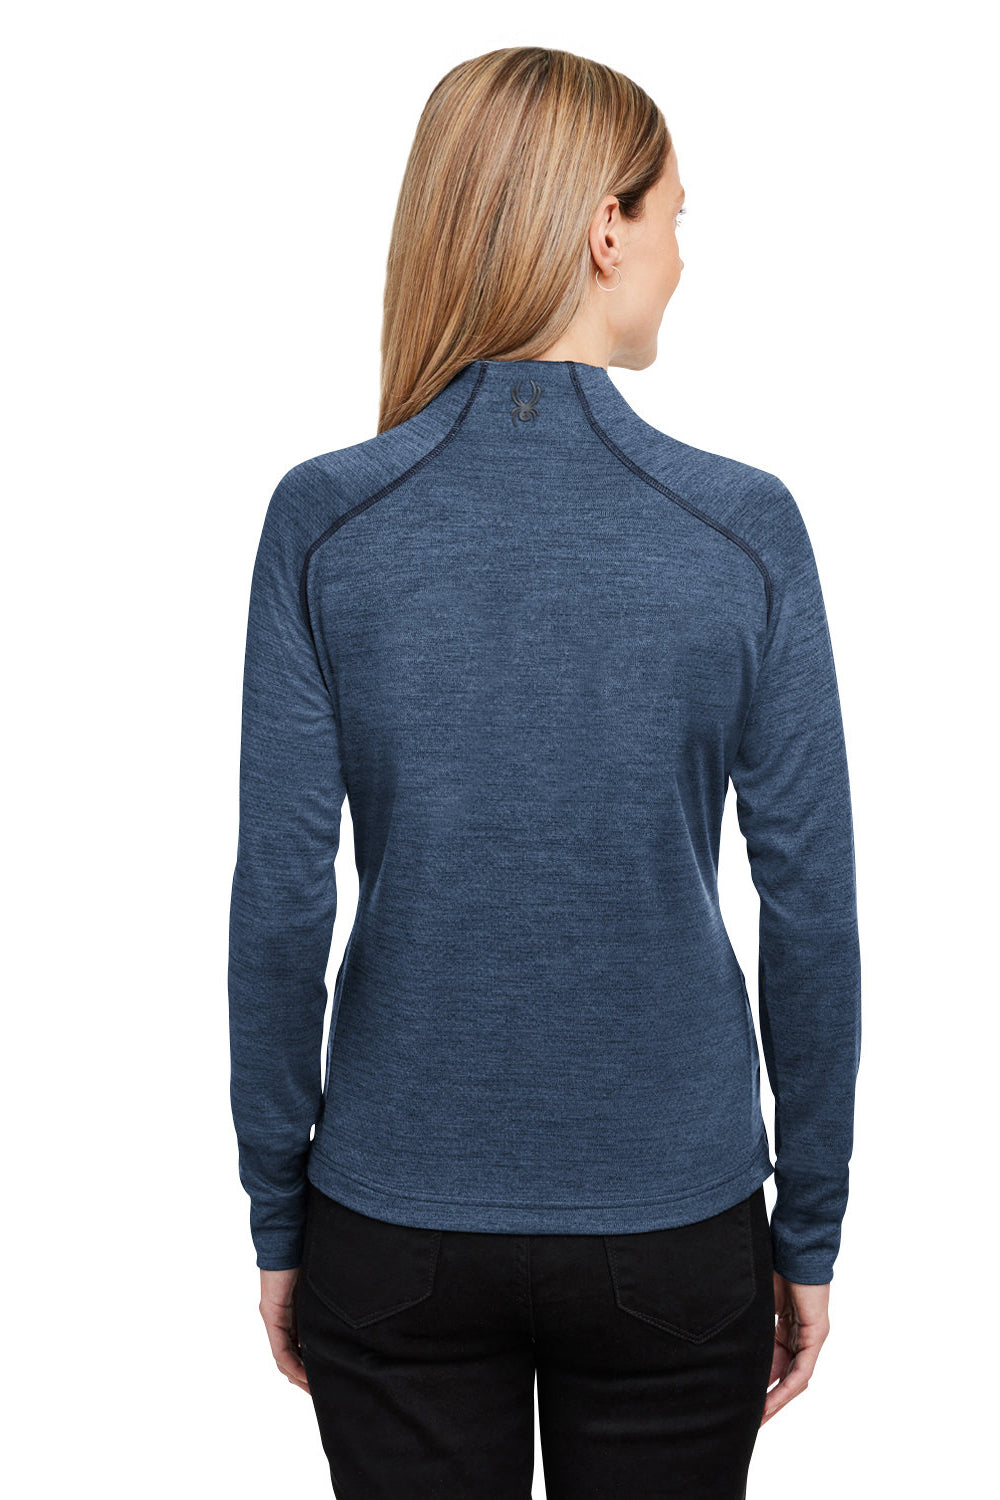 Spyder S17998 Womens Mission 1/4 Zip Sweatshirt Frontier Blue Back